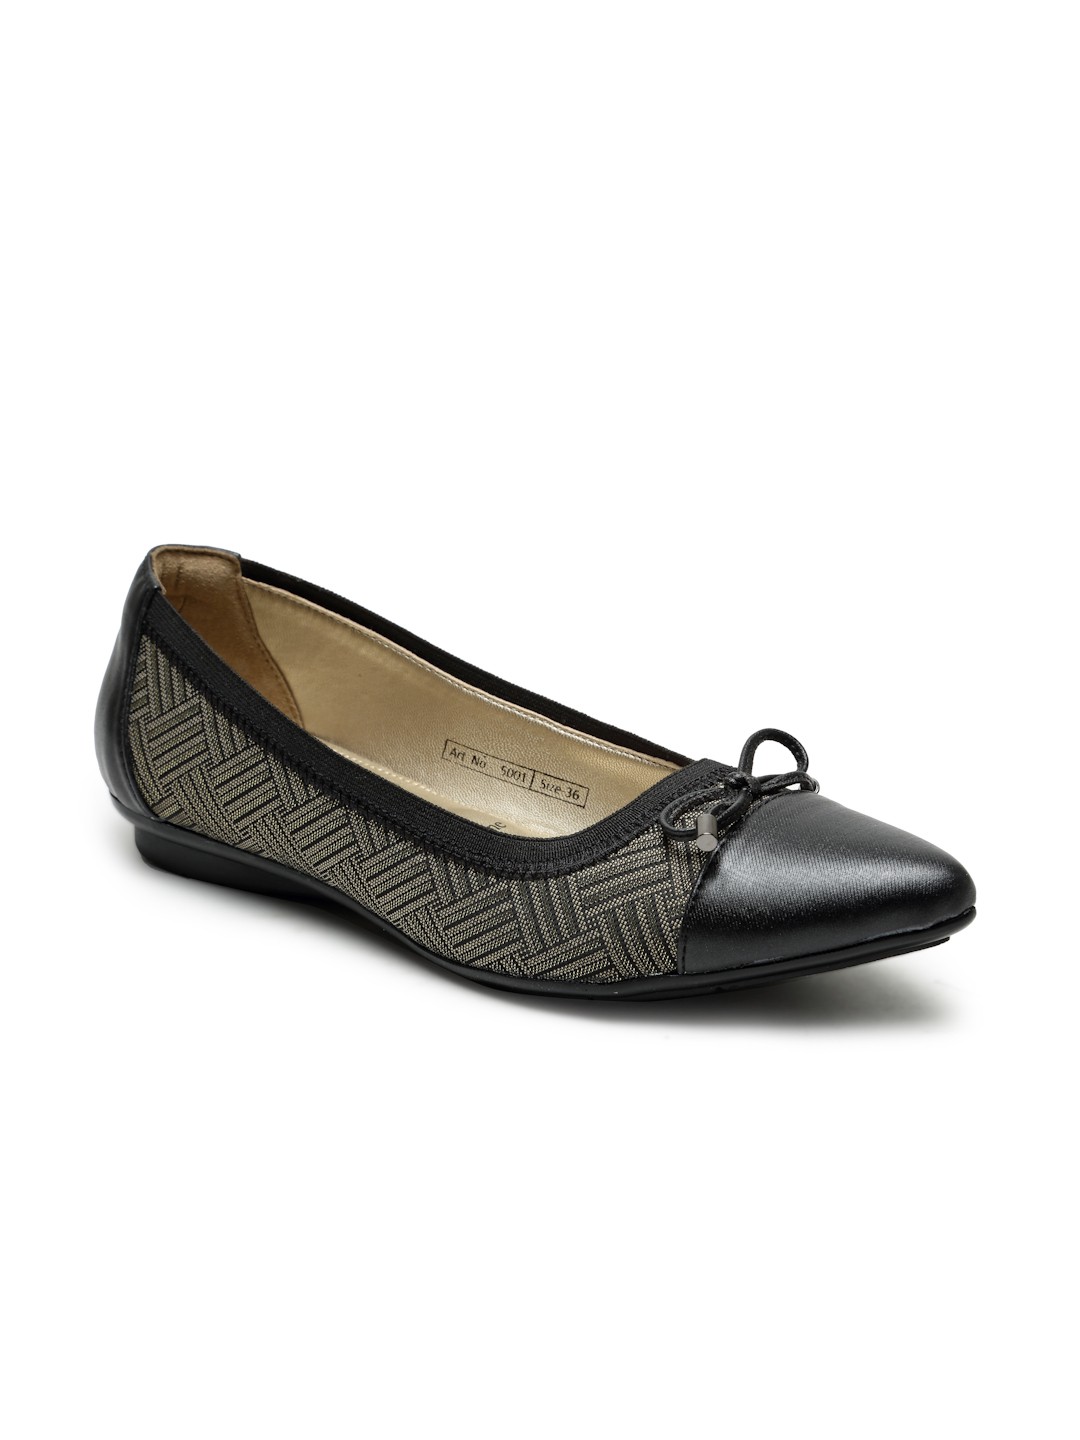 Buy Von Wellx Germany Comfort Women's Black Casual Shoes Lisa Online in Visakhapatnam